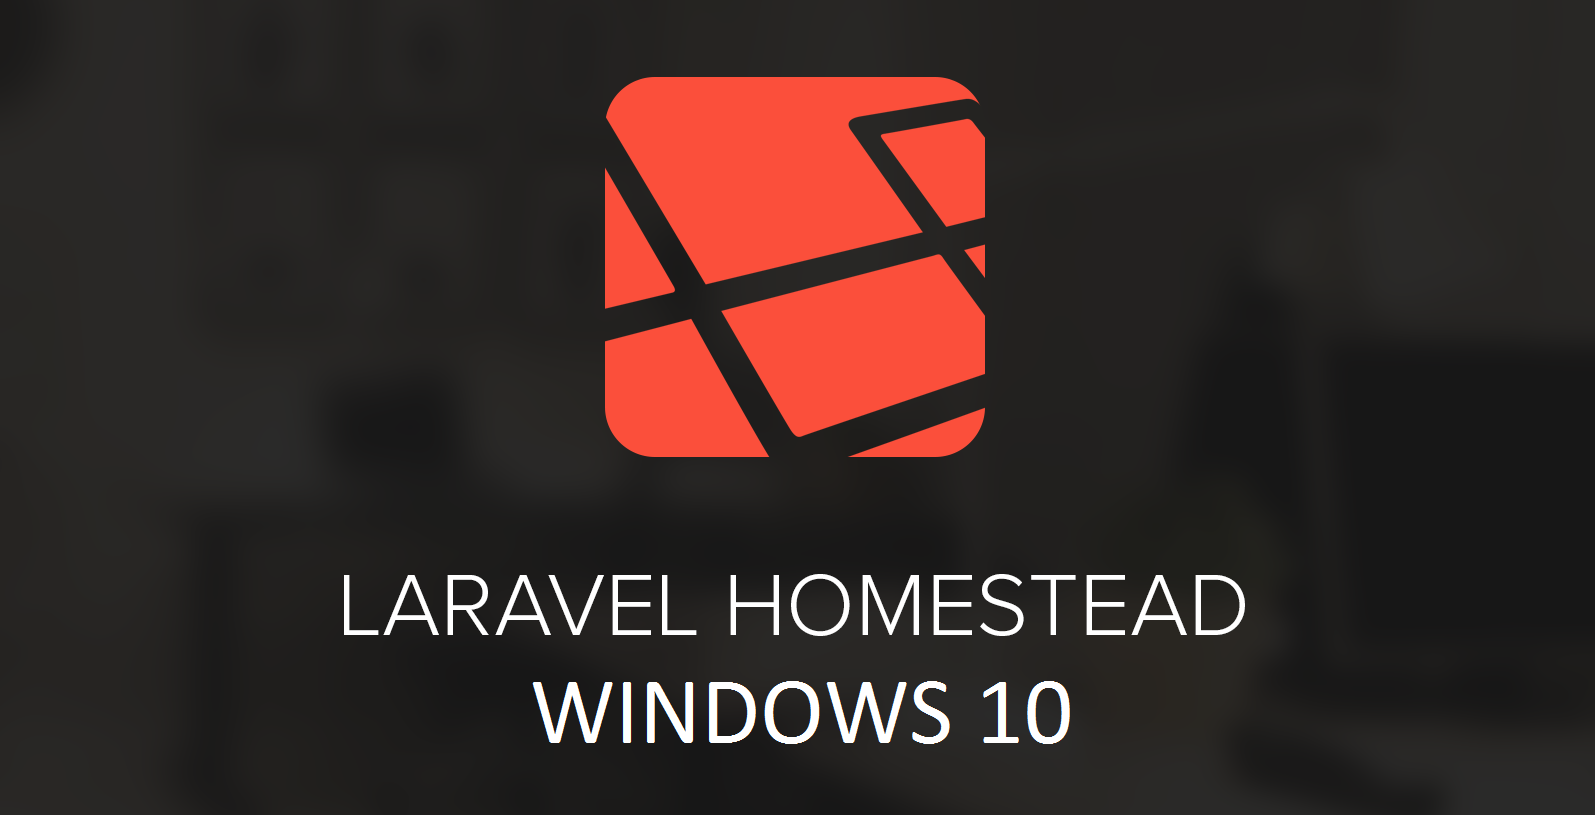 installare-laravel-homestead-su-windows